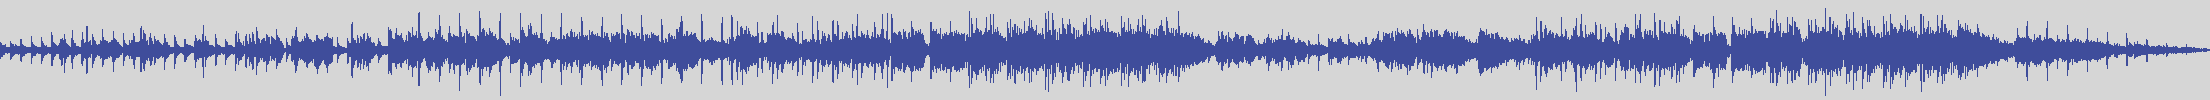 digiphonic_records [DPR013] Little Tony - Cavalli Bianchi [Original Mix] audio wave form